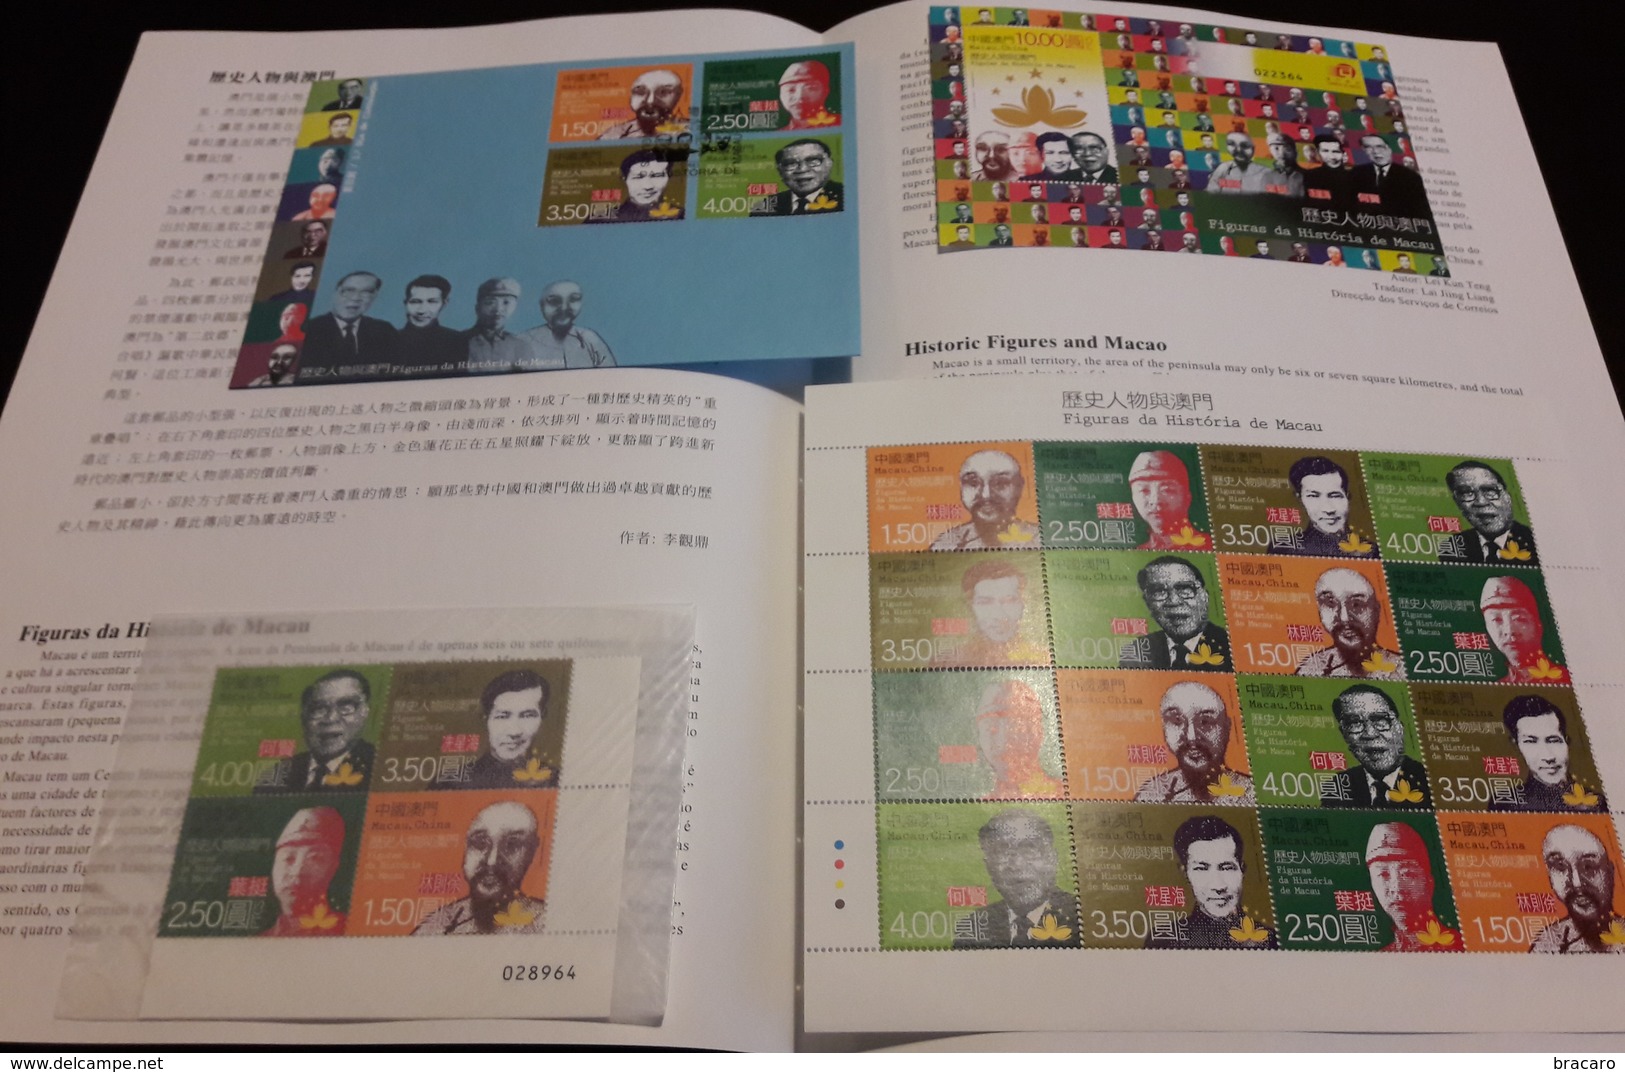 MACAU / MACAO (CHINA) - Historic Figures 2011 - Stamps (1/4 Sheet) MNH + Block MNH + Miniature Sheet MNH + FDC + Leaflet - Collections, Lots & Séries